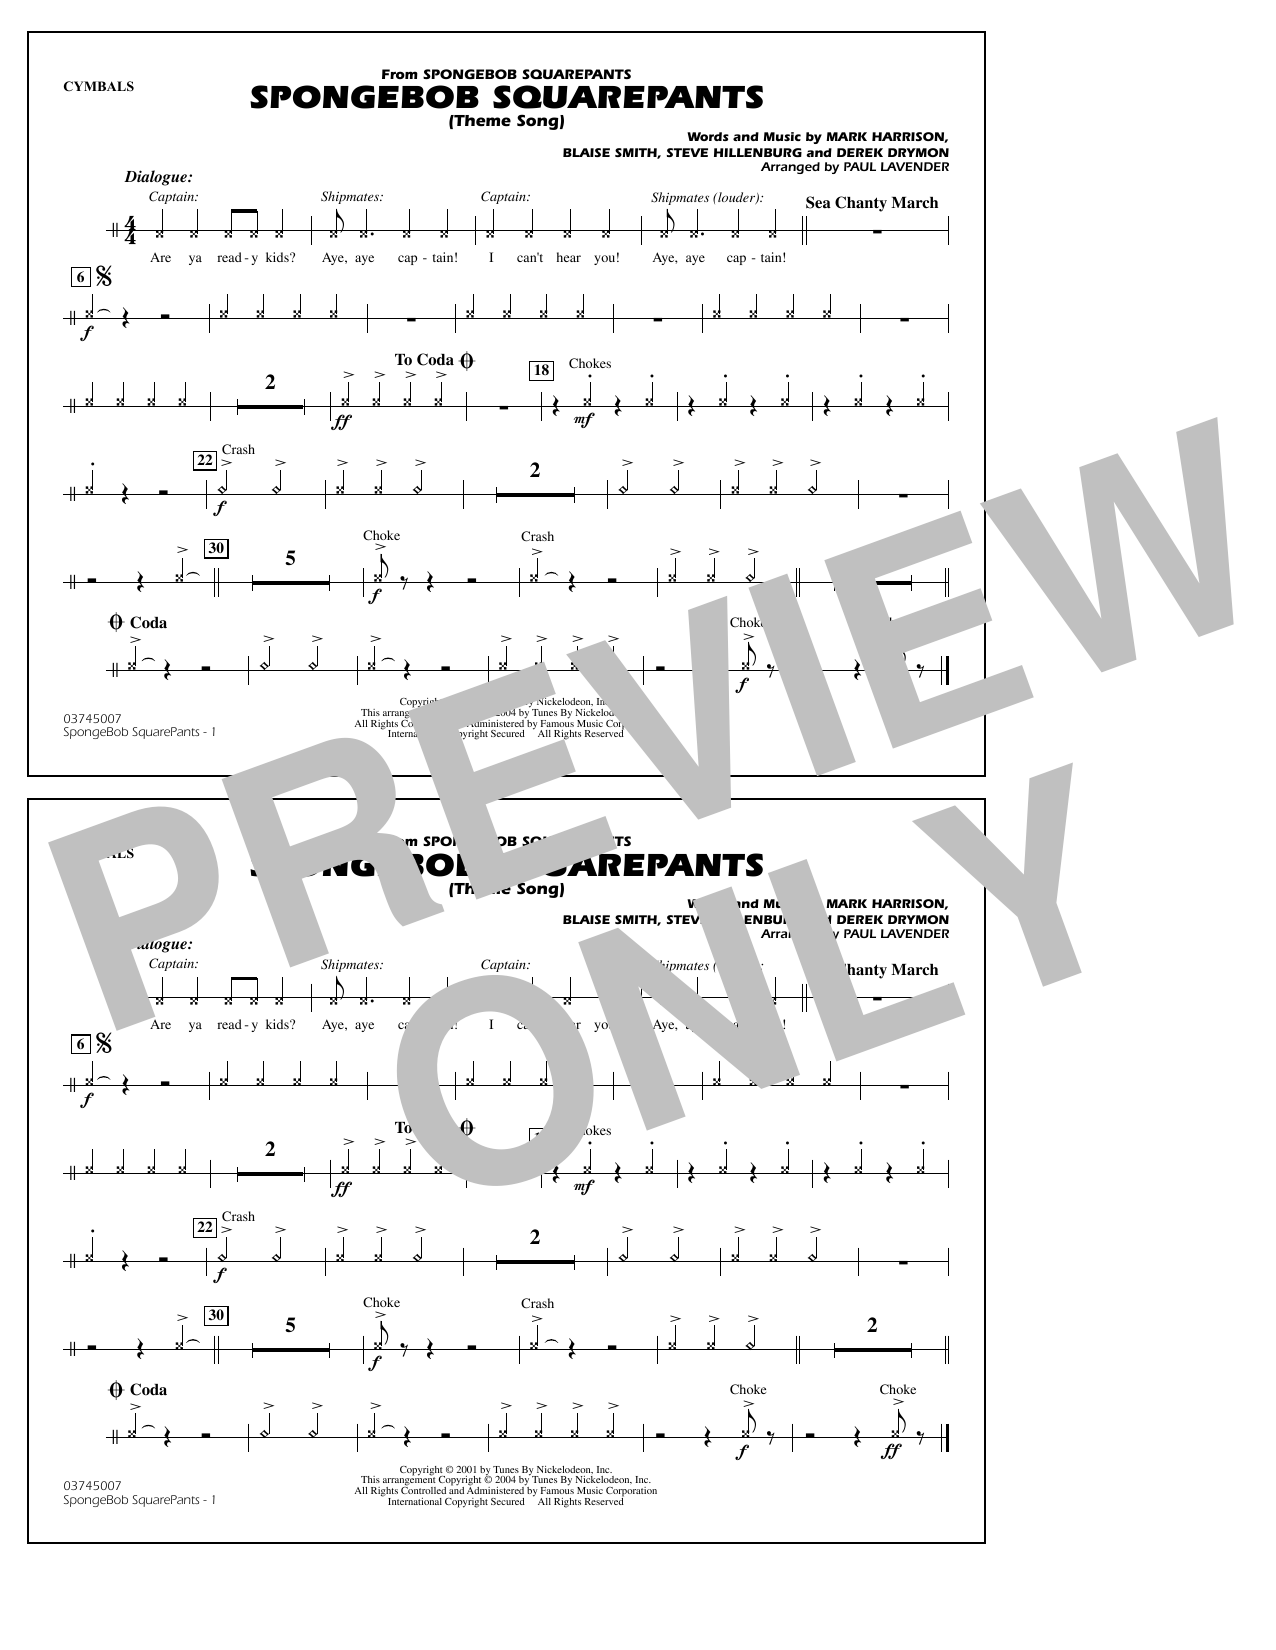 Steve Hillenburg Spongebob Squarepants (Theme Song) (arr. Paul Lavender) - Cymbals Sheet Music Notes & Chords for Marching Band - Download or Print PDF